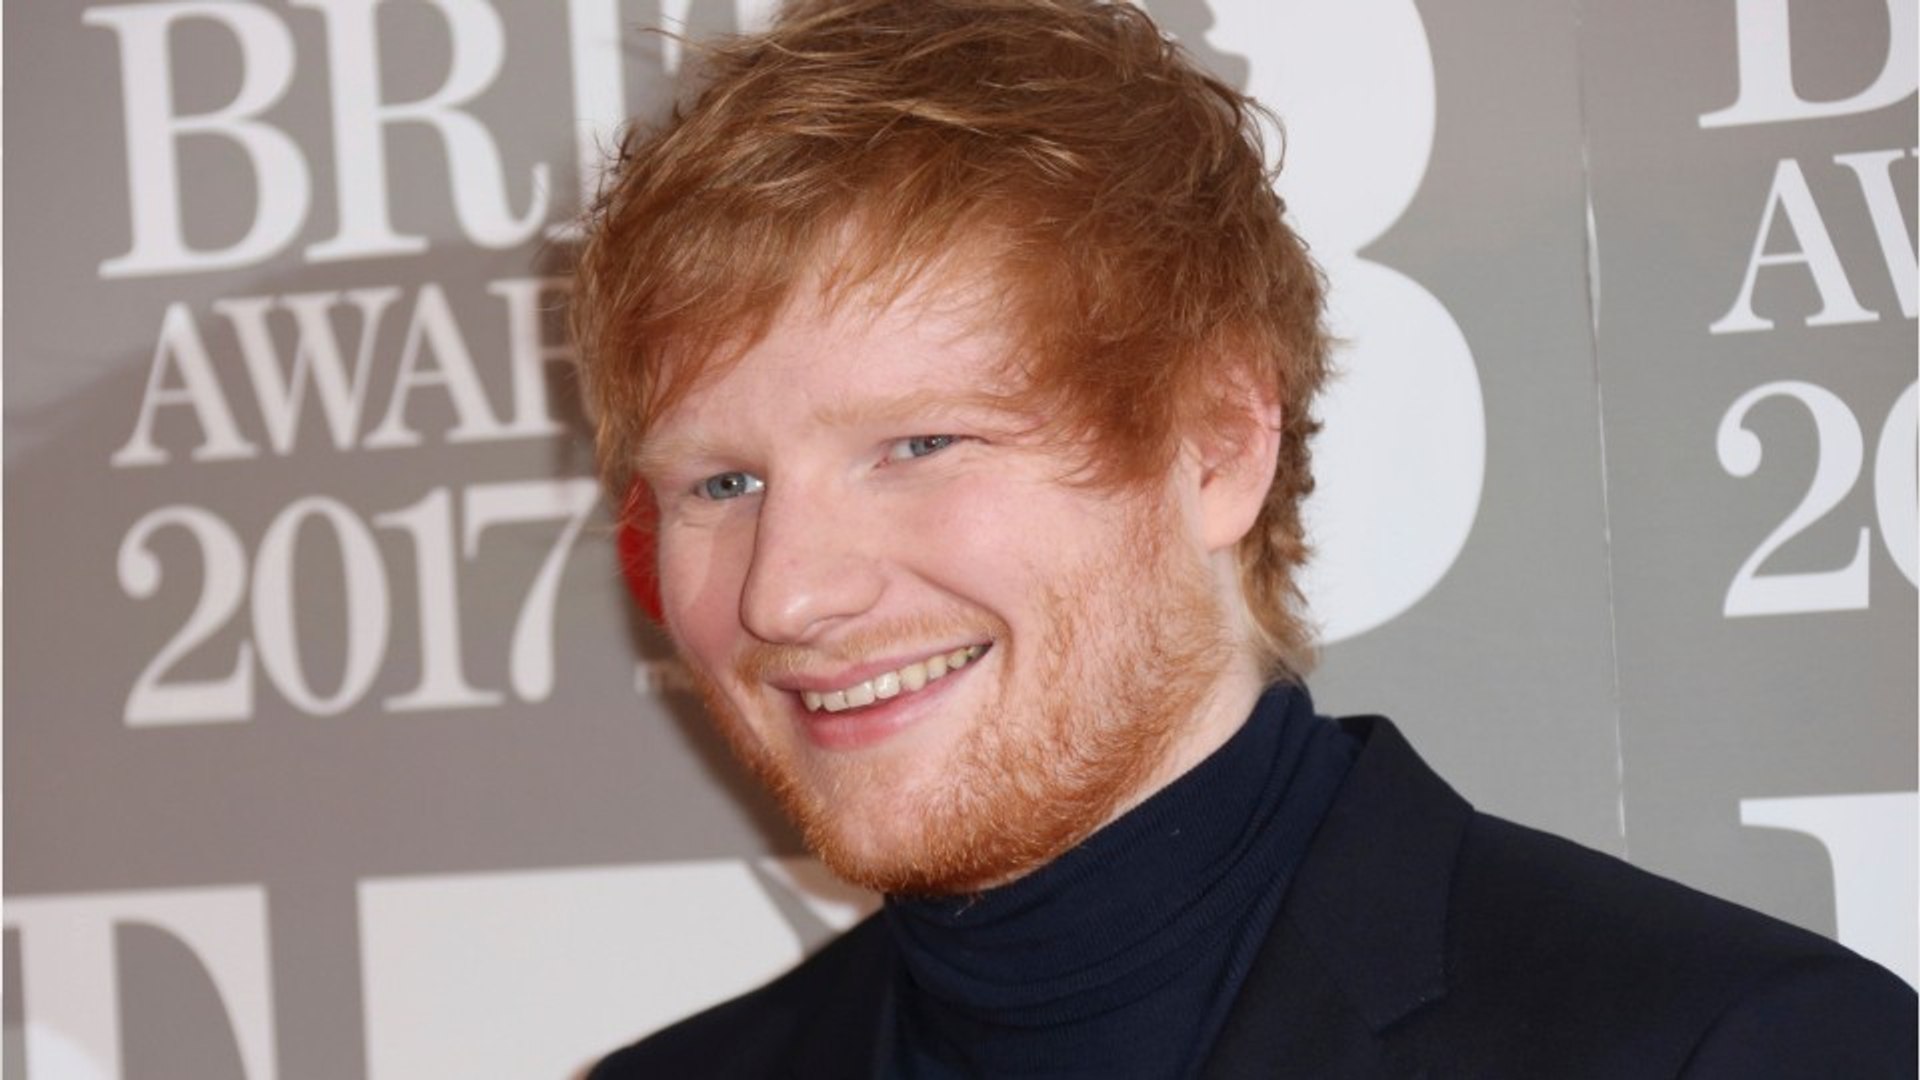 Ed Sheeran Performs 'Shape Of You' On Kiddie Instruments